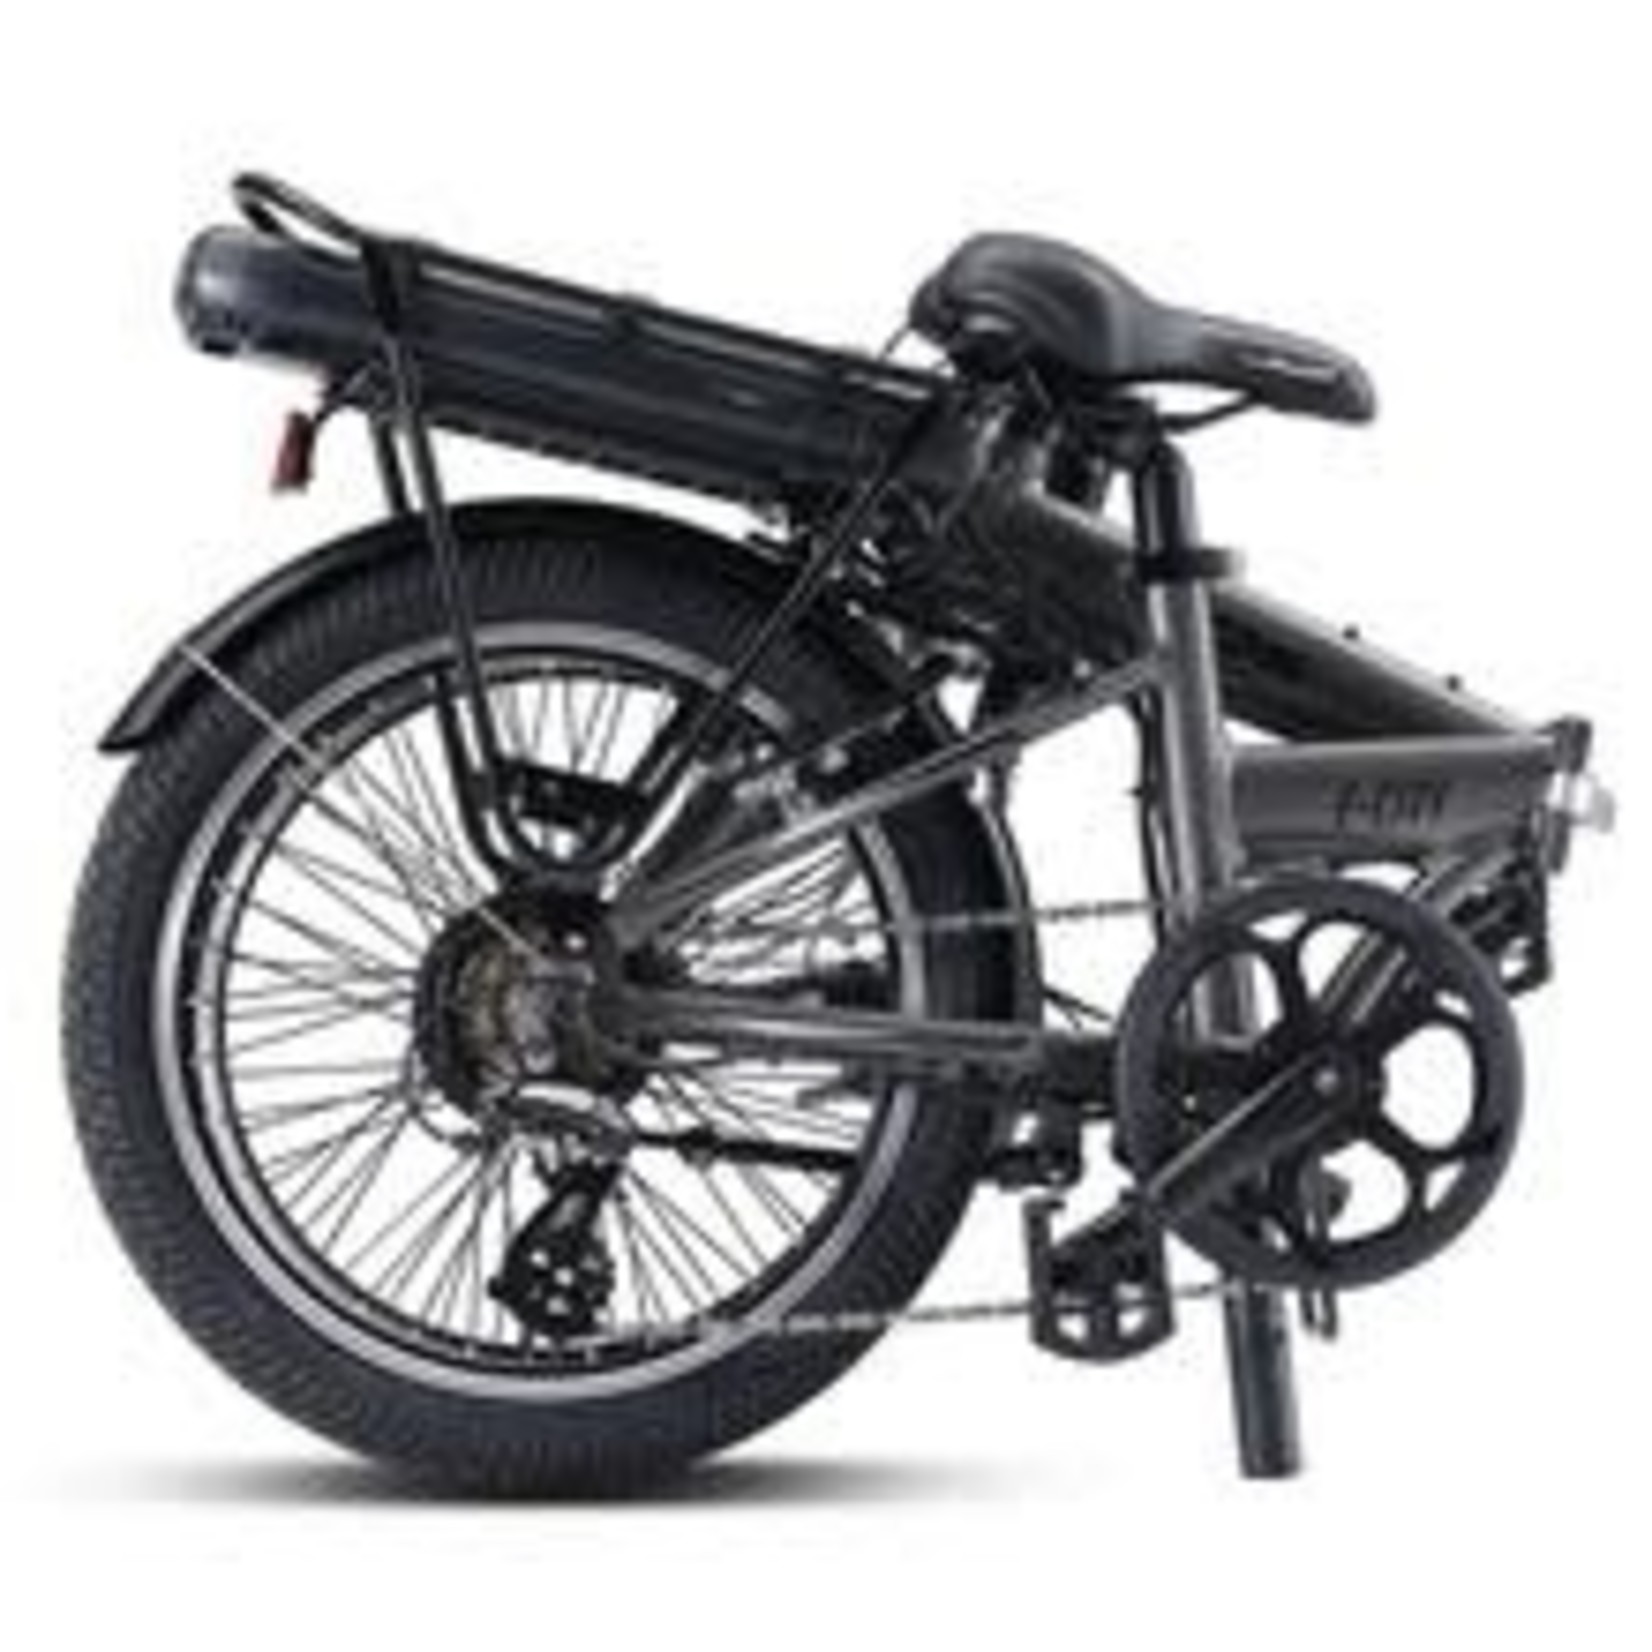 XDS XDS E-City Electric Folding Bike 20"